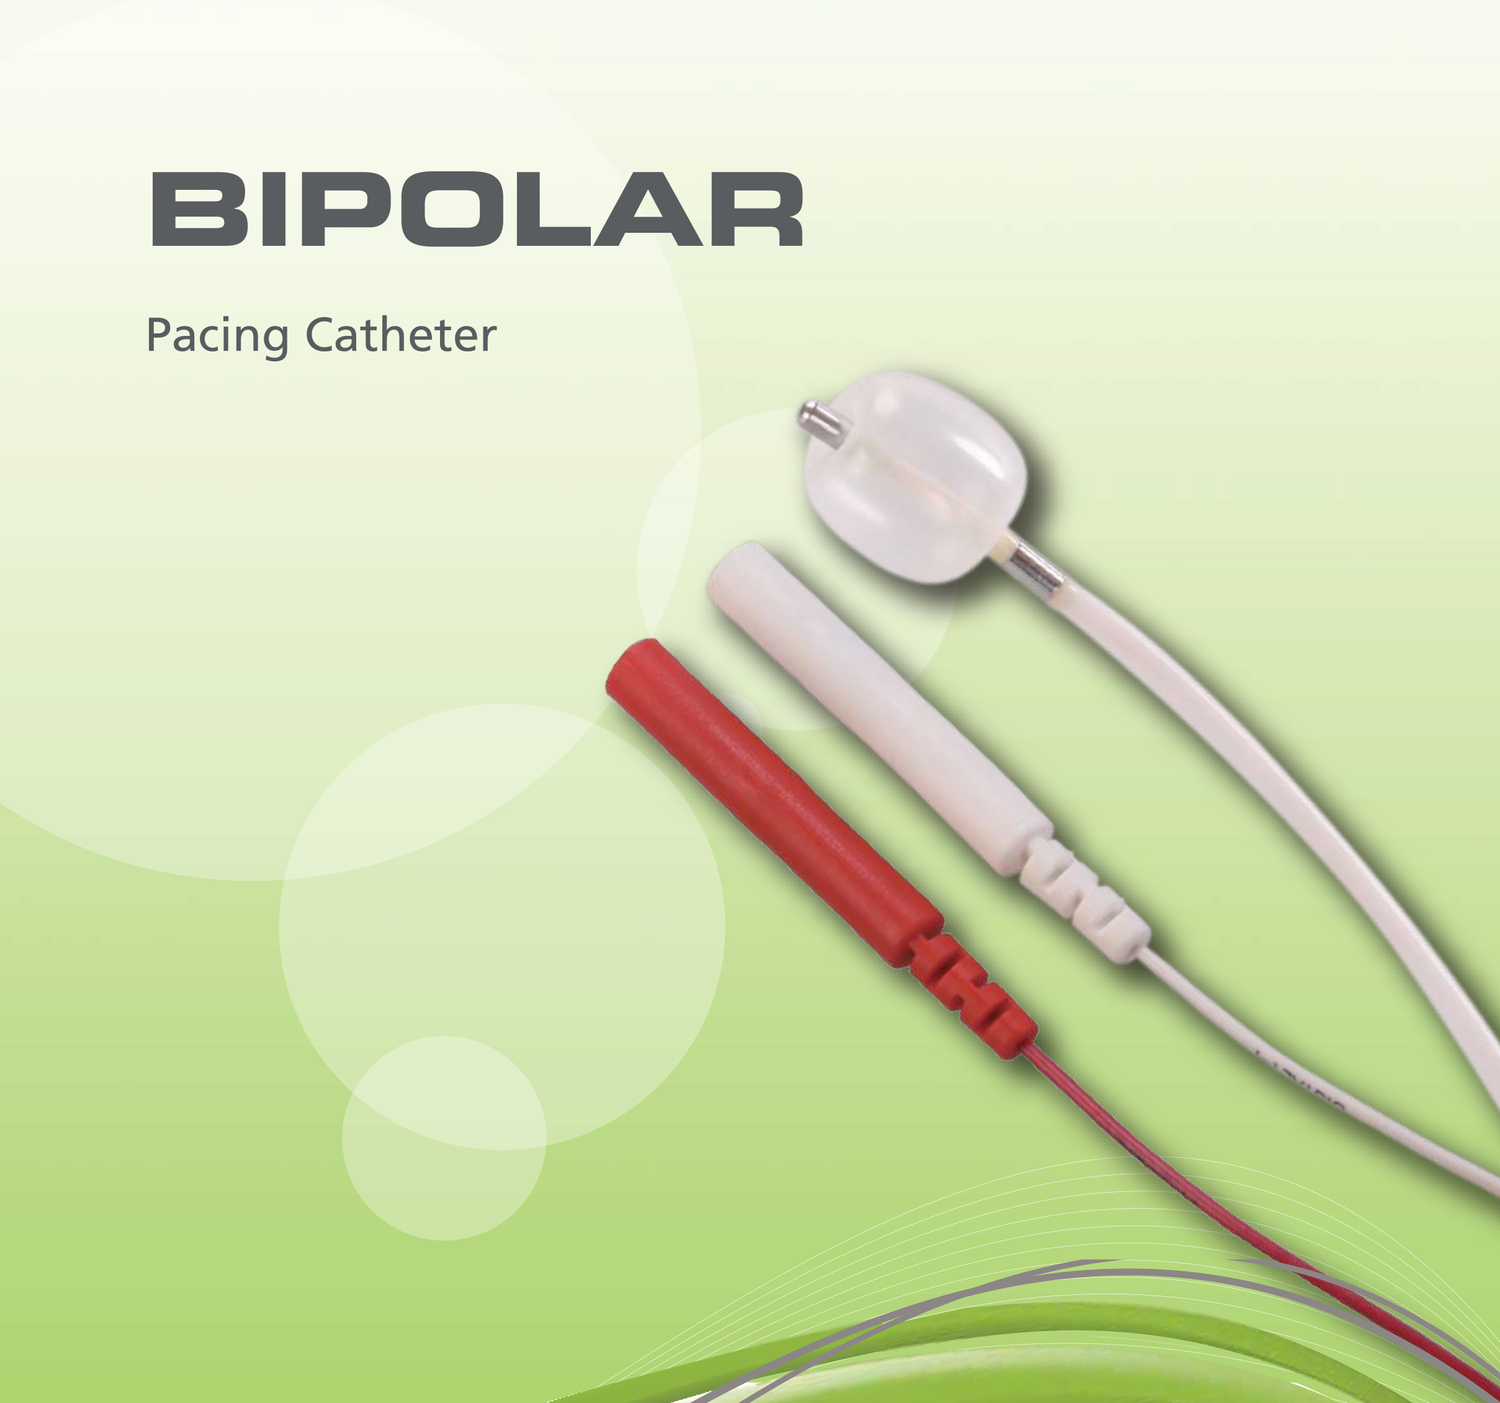 Bipolar Pacing Catheter Czech Republic medical market medical equipment, tools, components interventional cardiology, radiology, angiology, arrhythmology, electrophysiology and neurophysiology